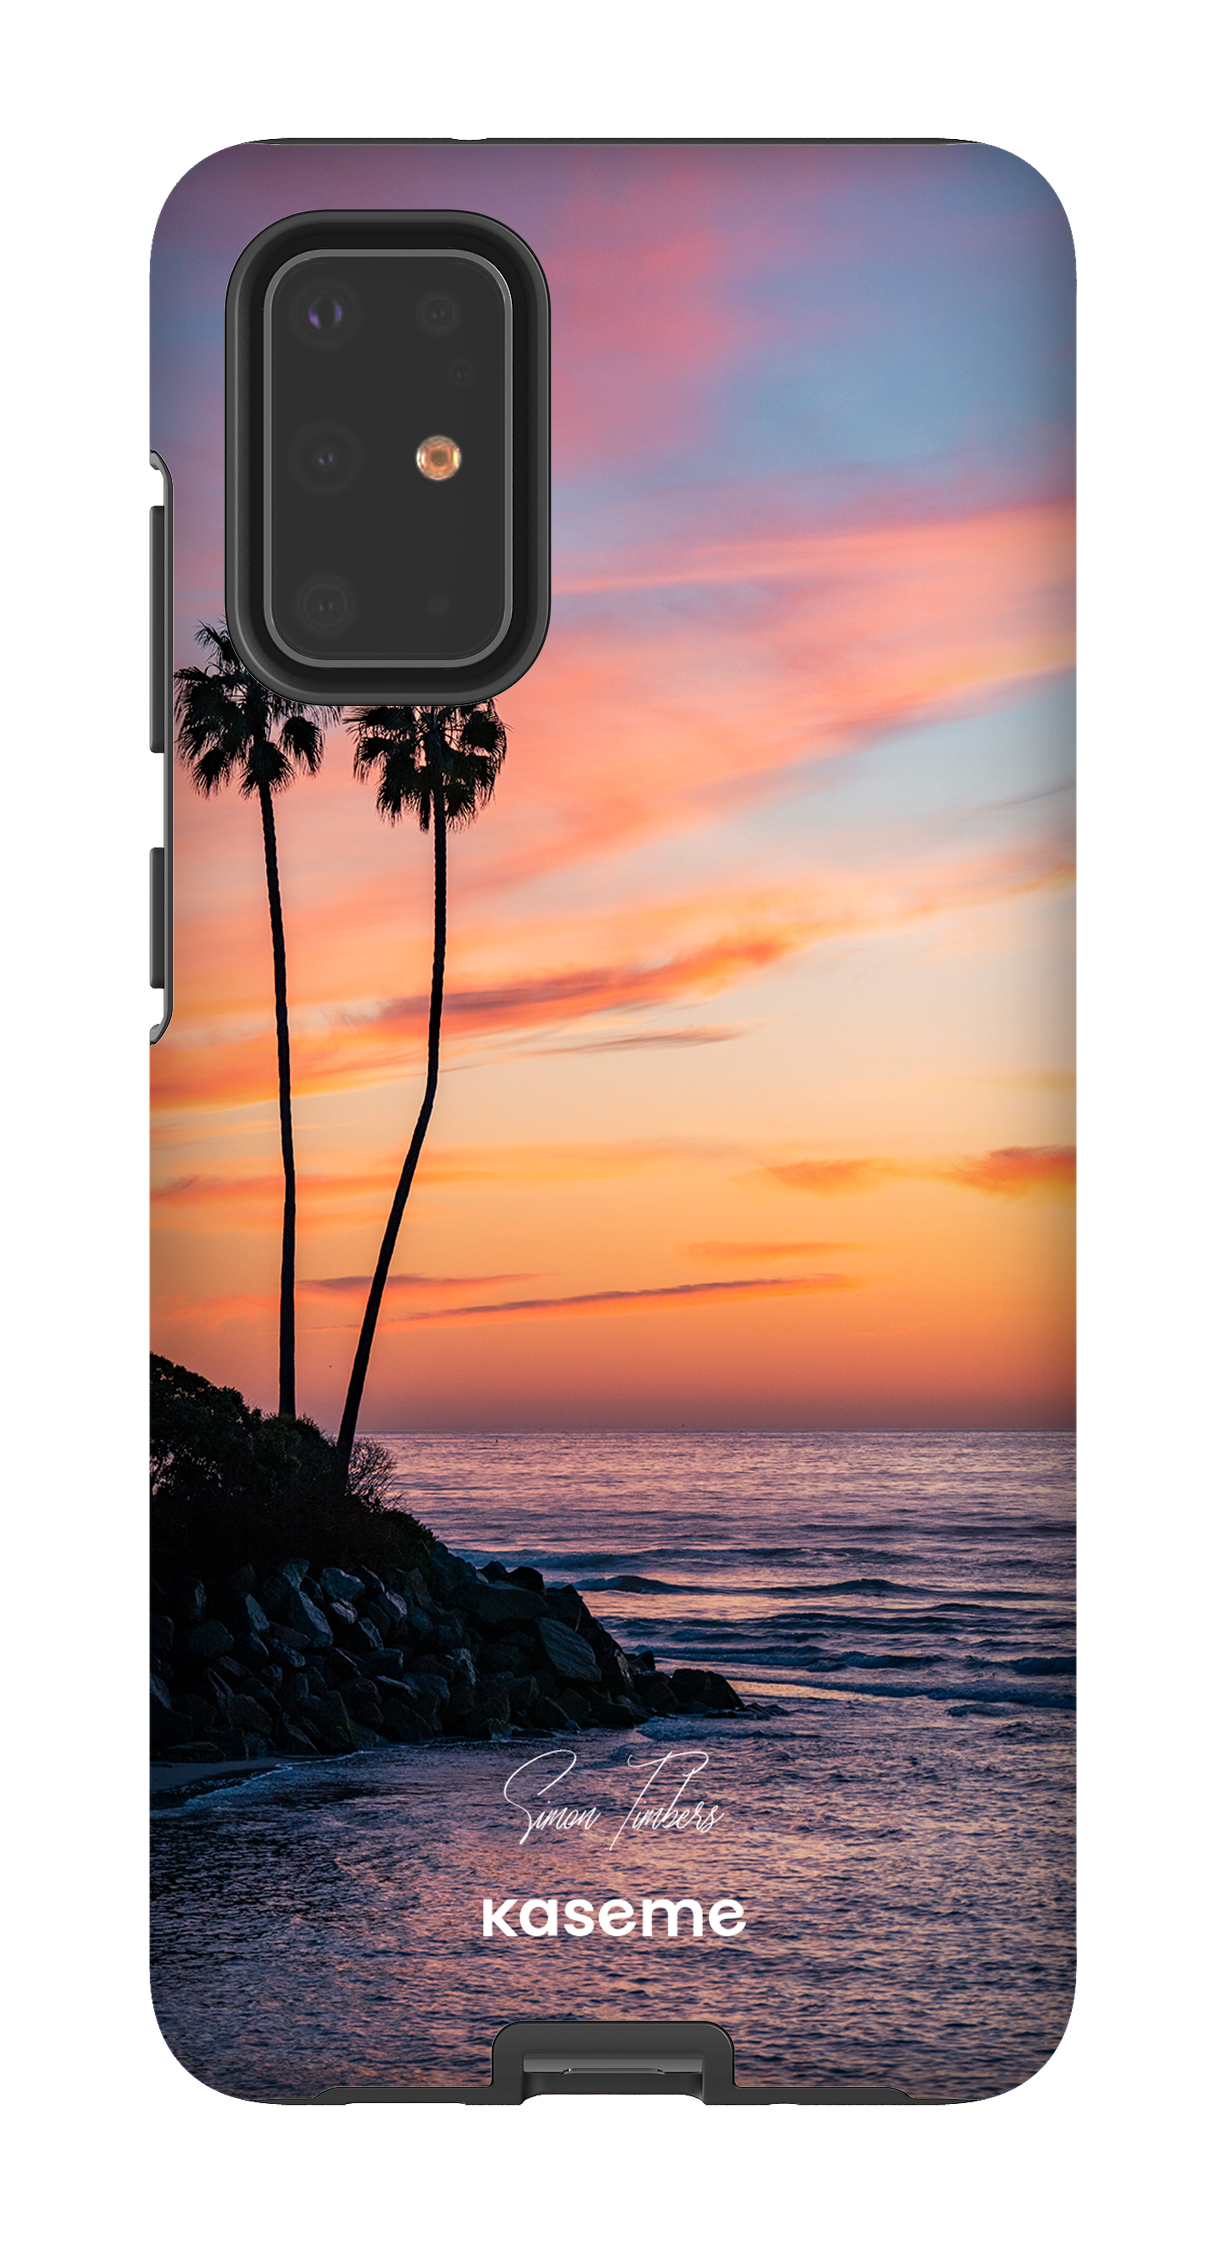 Sunset Palms by Simon Timbers - Galaxy S20 Plus